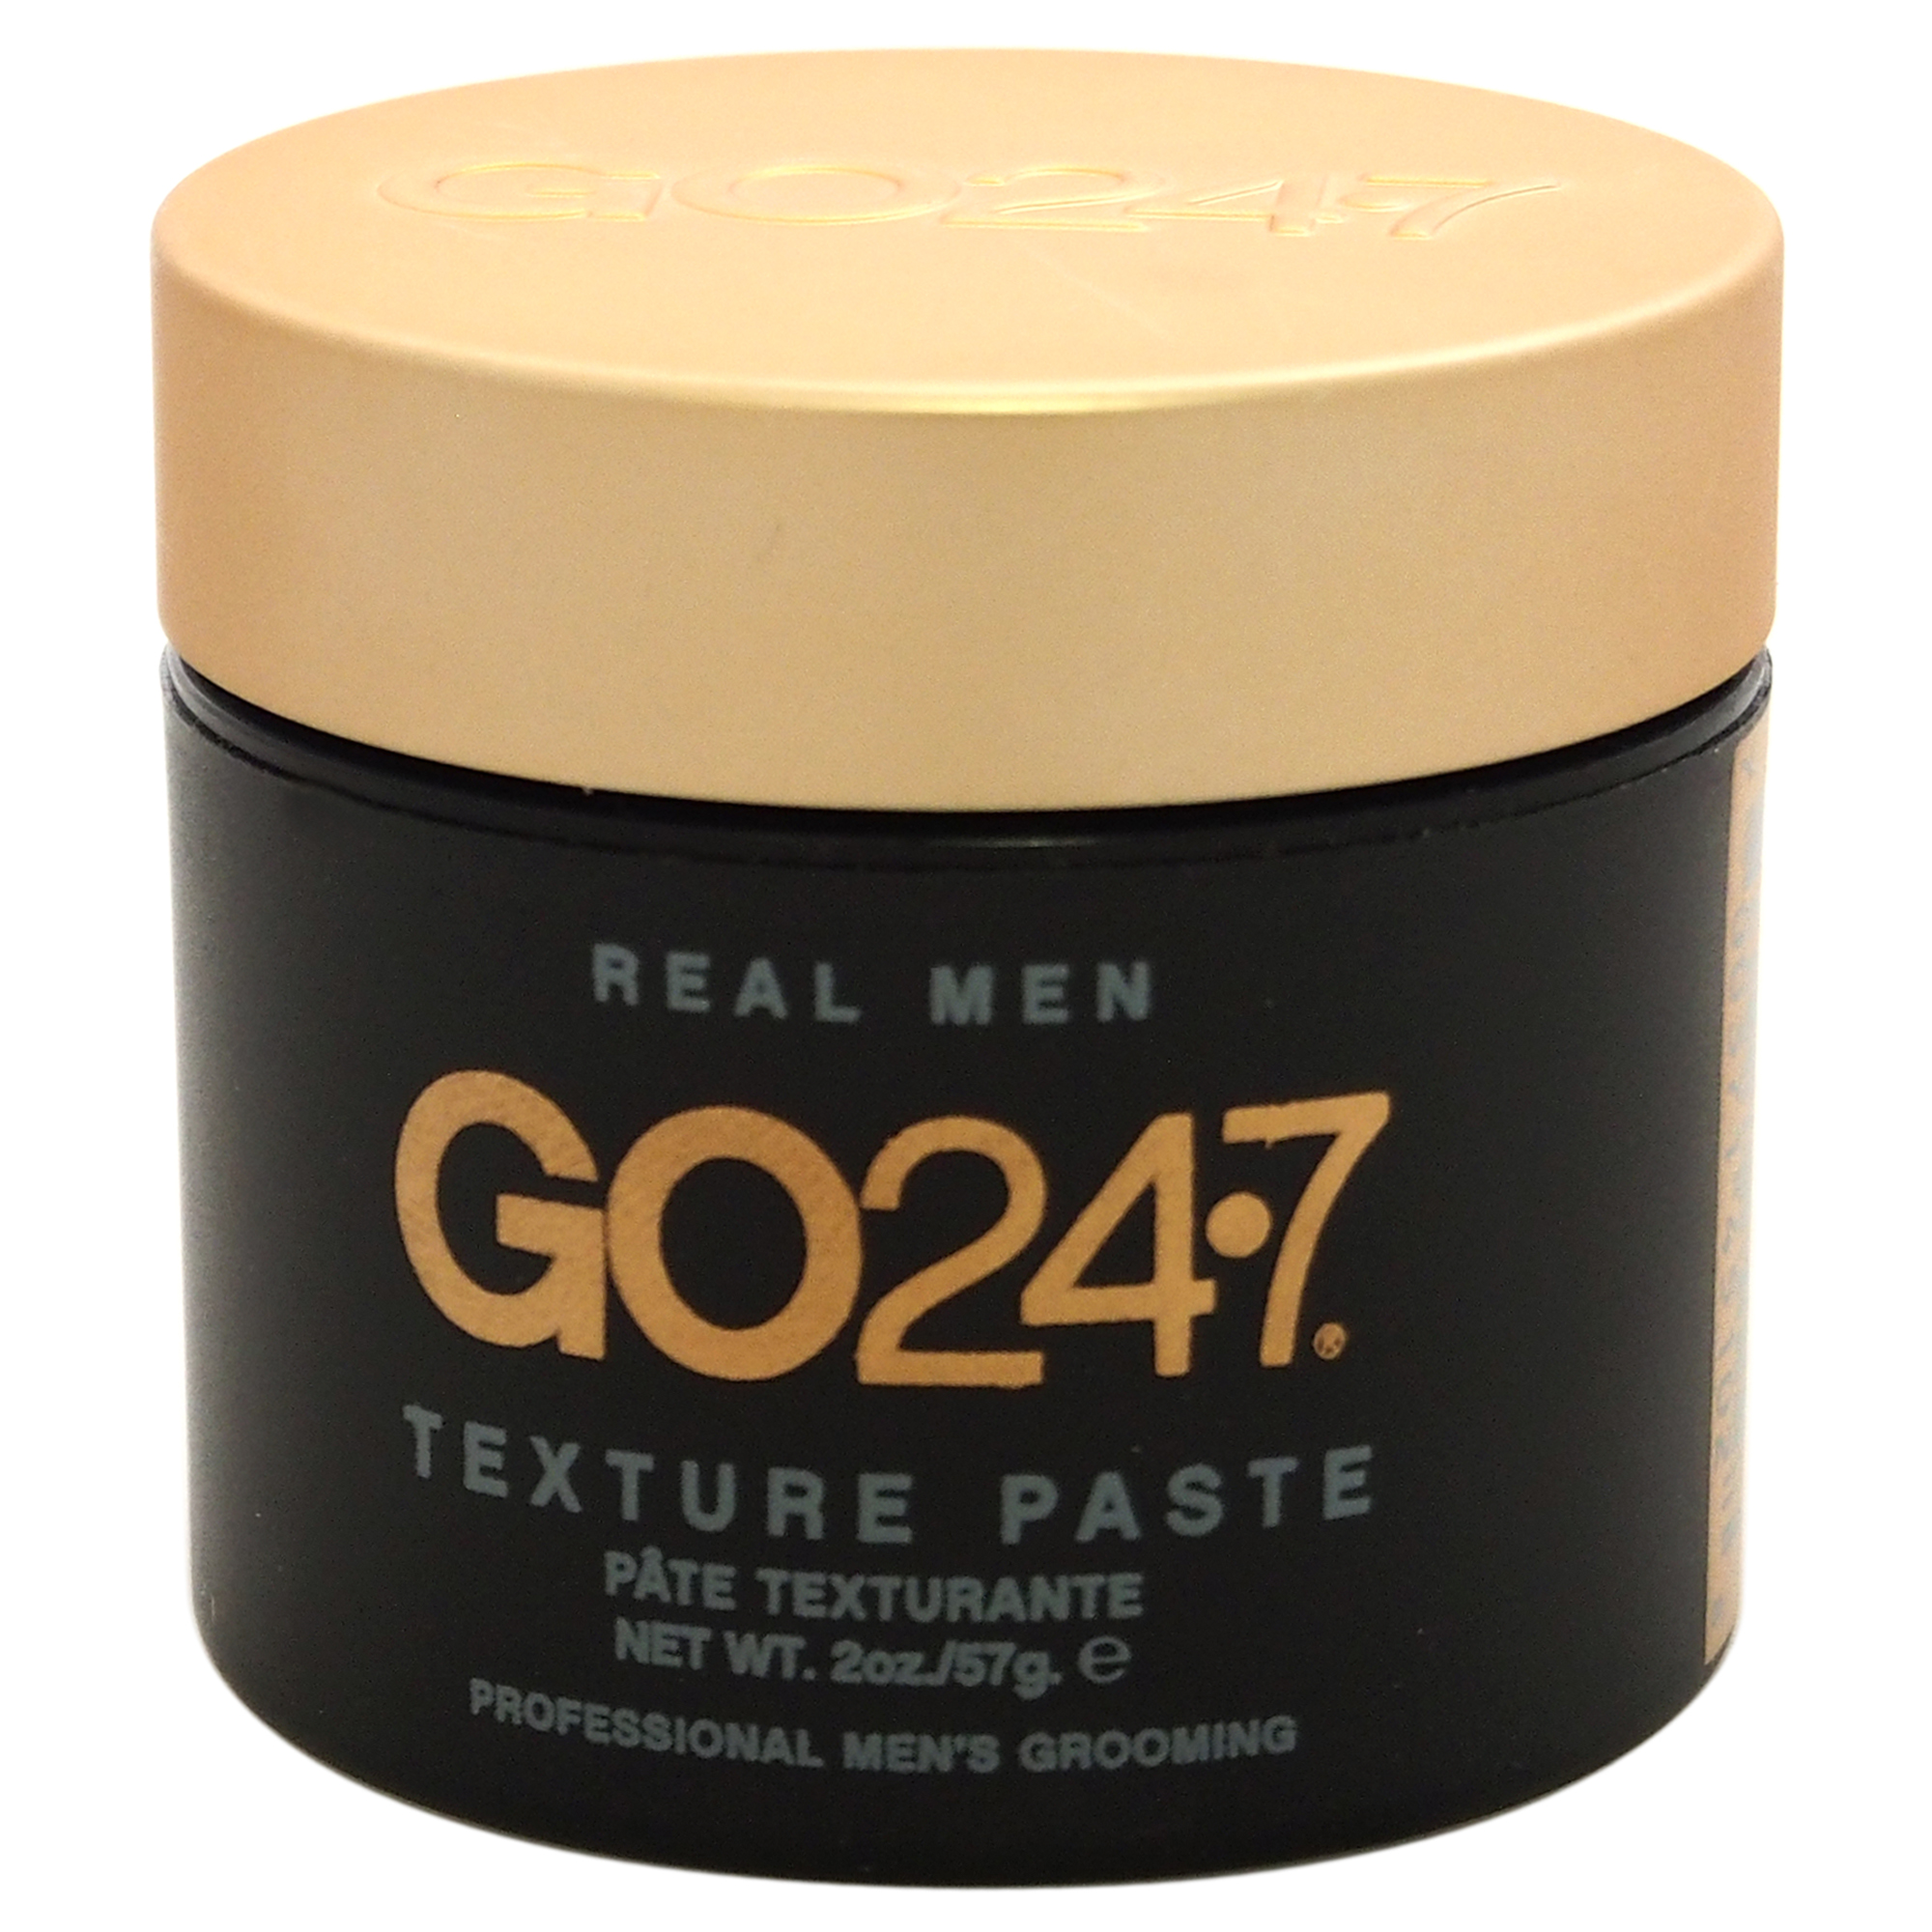 Go247 Real Men Texture Paste